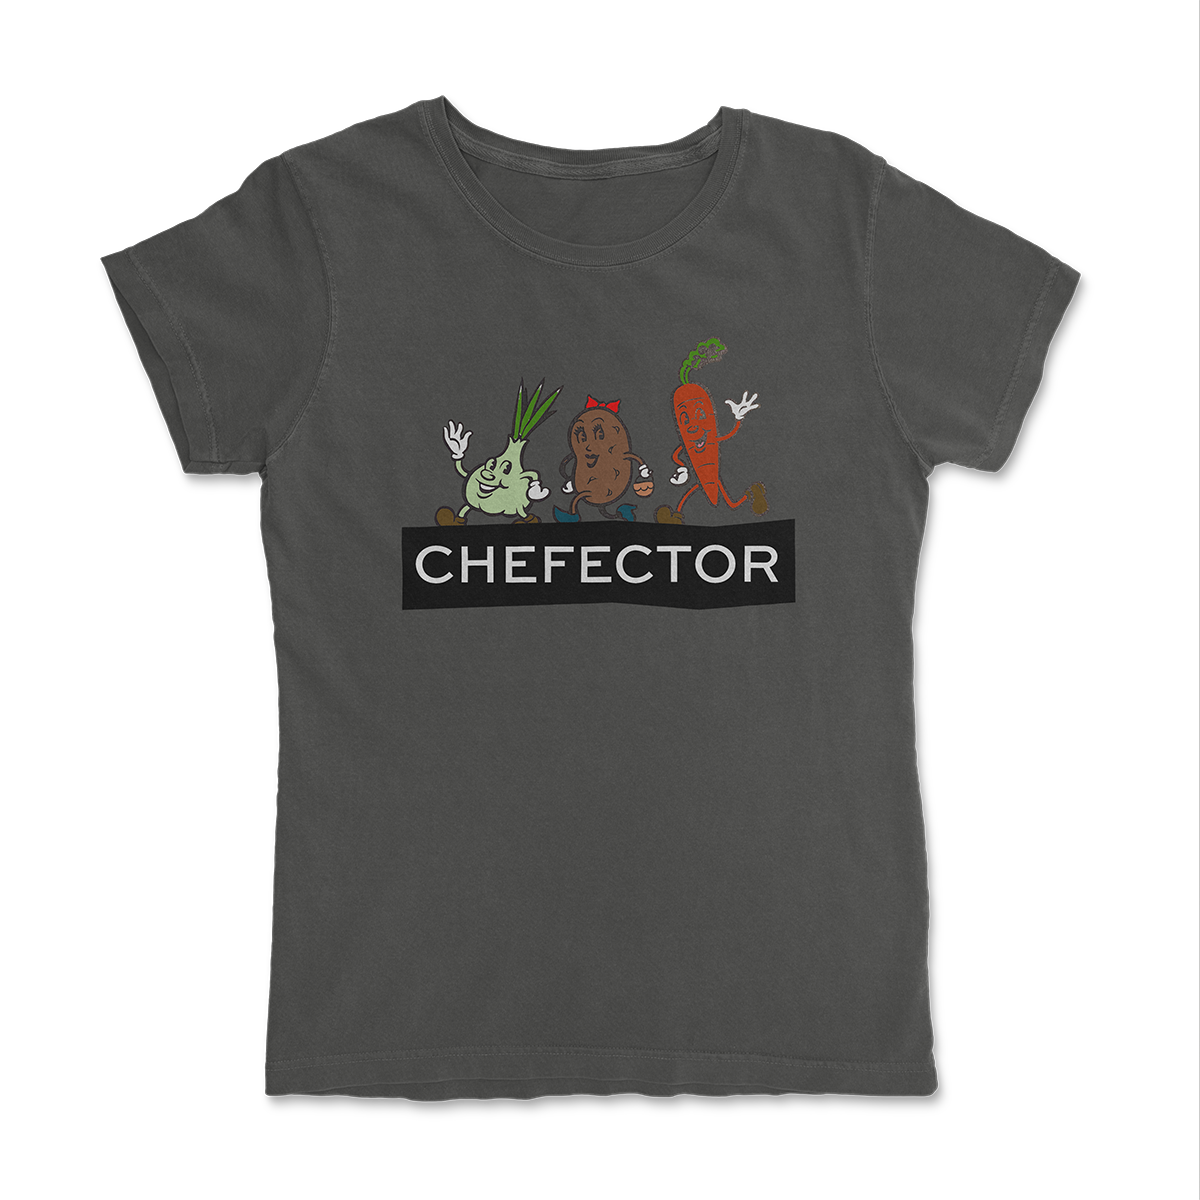 Chefector shirt with CHEFECTOR logo and three veggies dancing